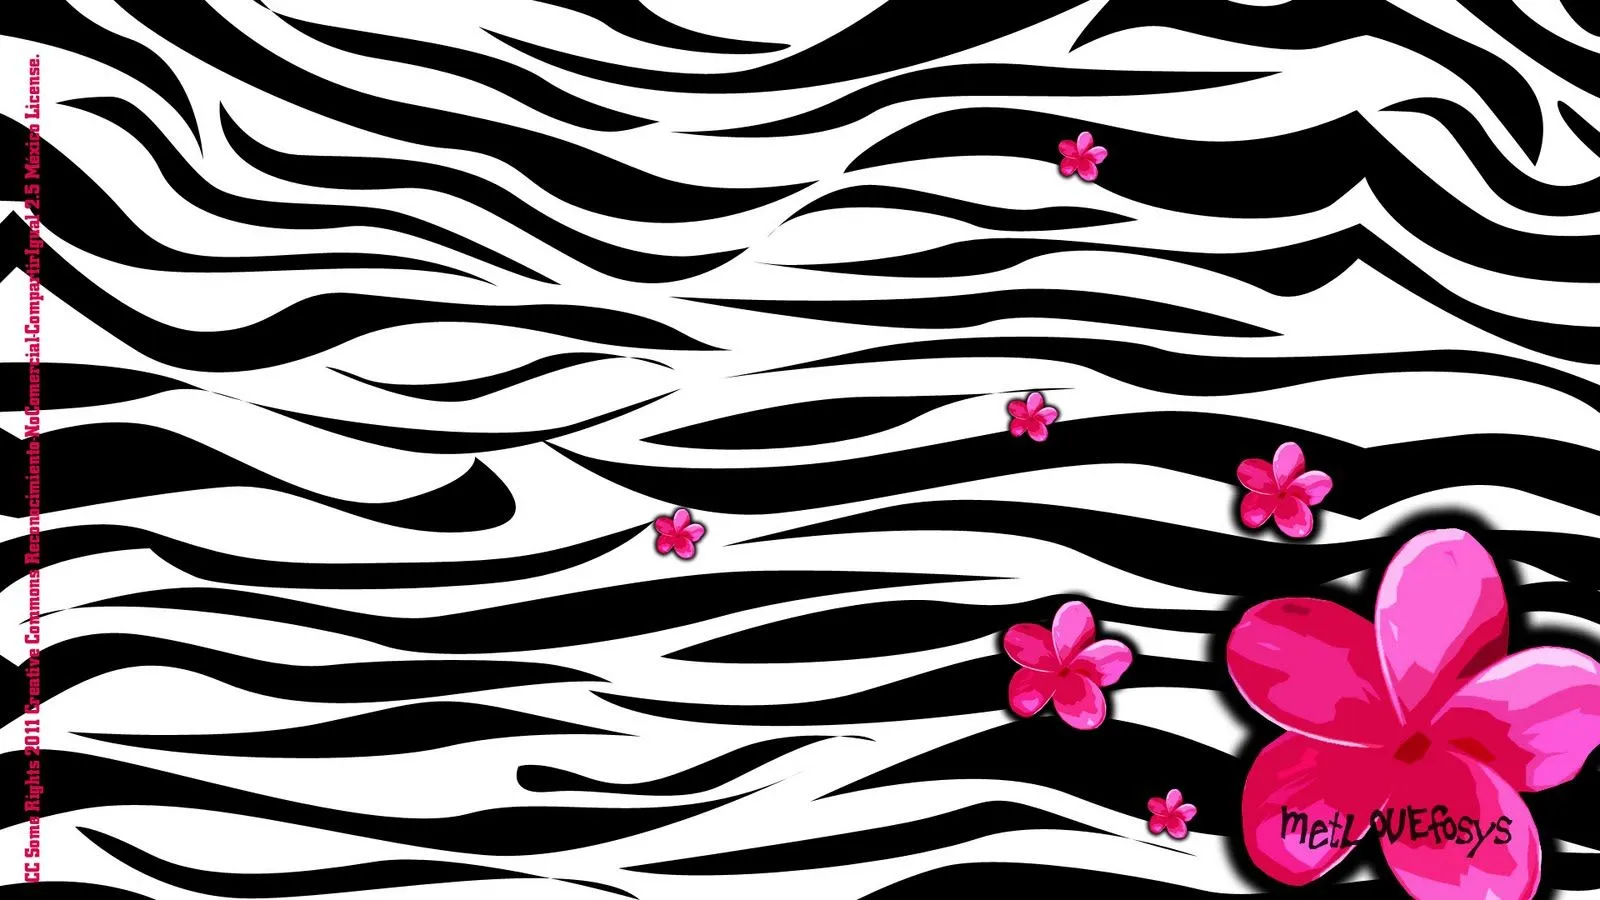 wwWallpaper ]-: wallpaper cebra y flor